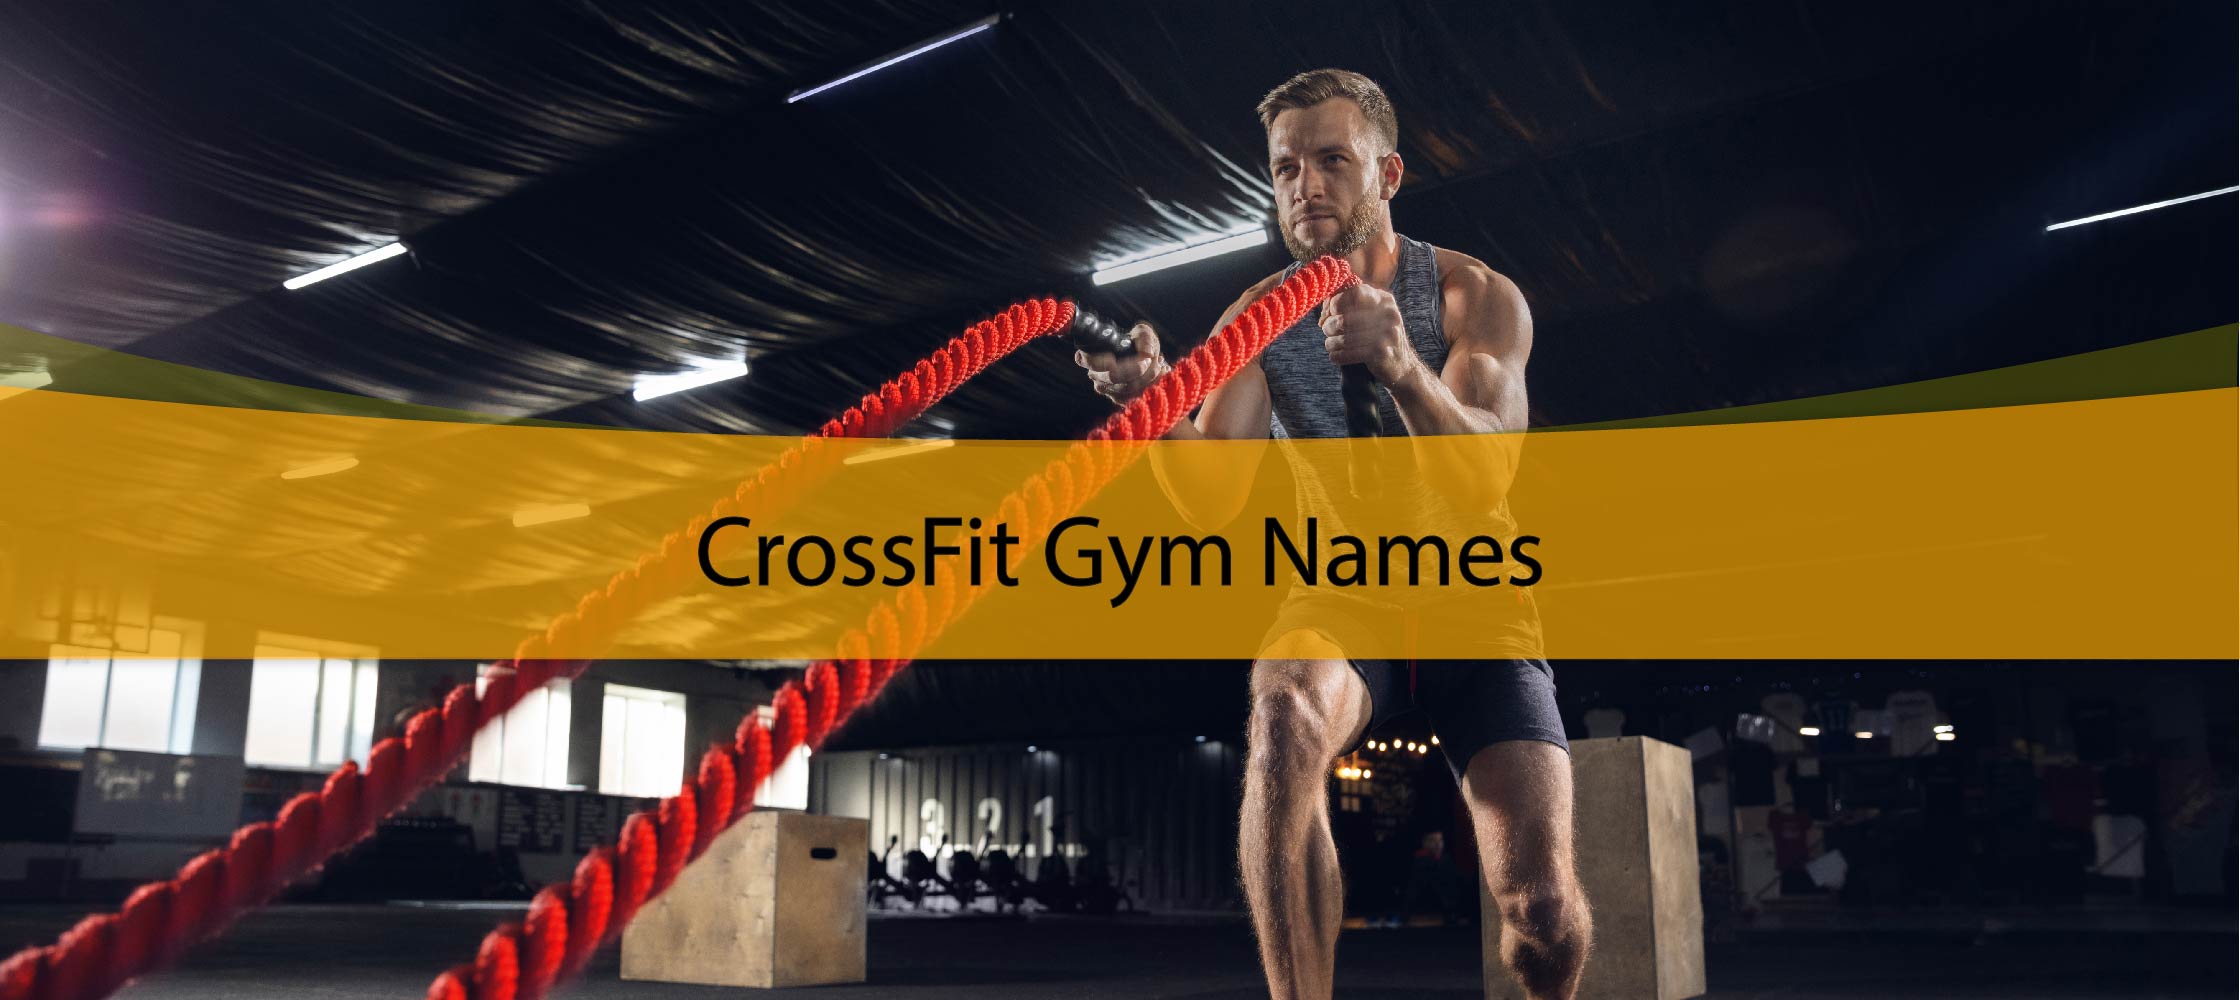 CrossFit Gym Names